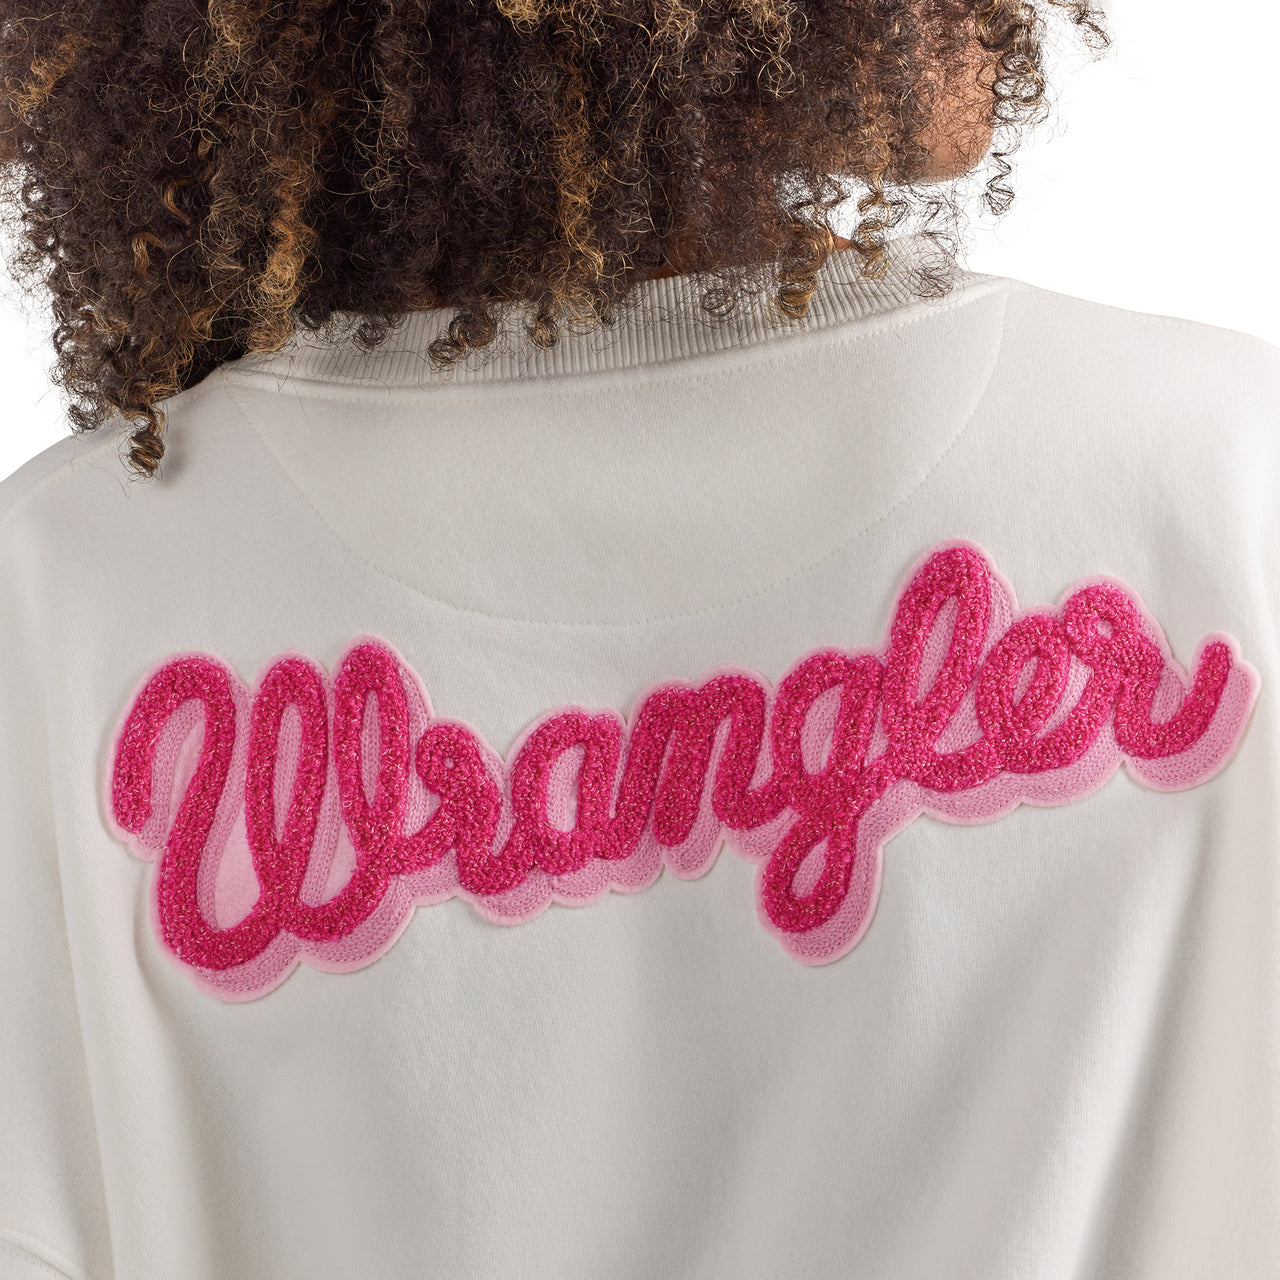 Wrangler X Barbie Women's Sweatshirt - Off White